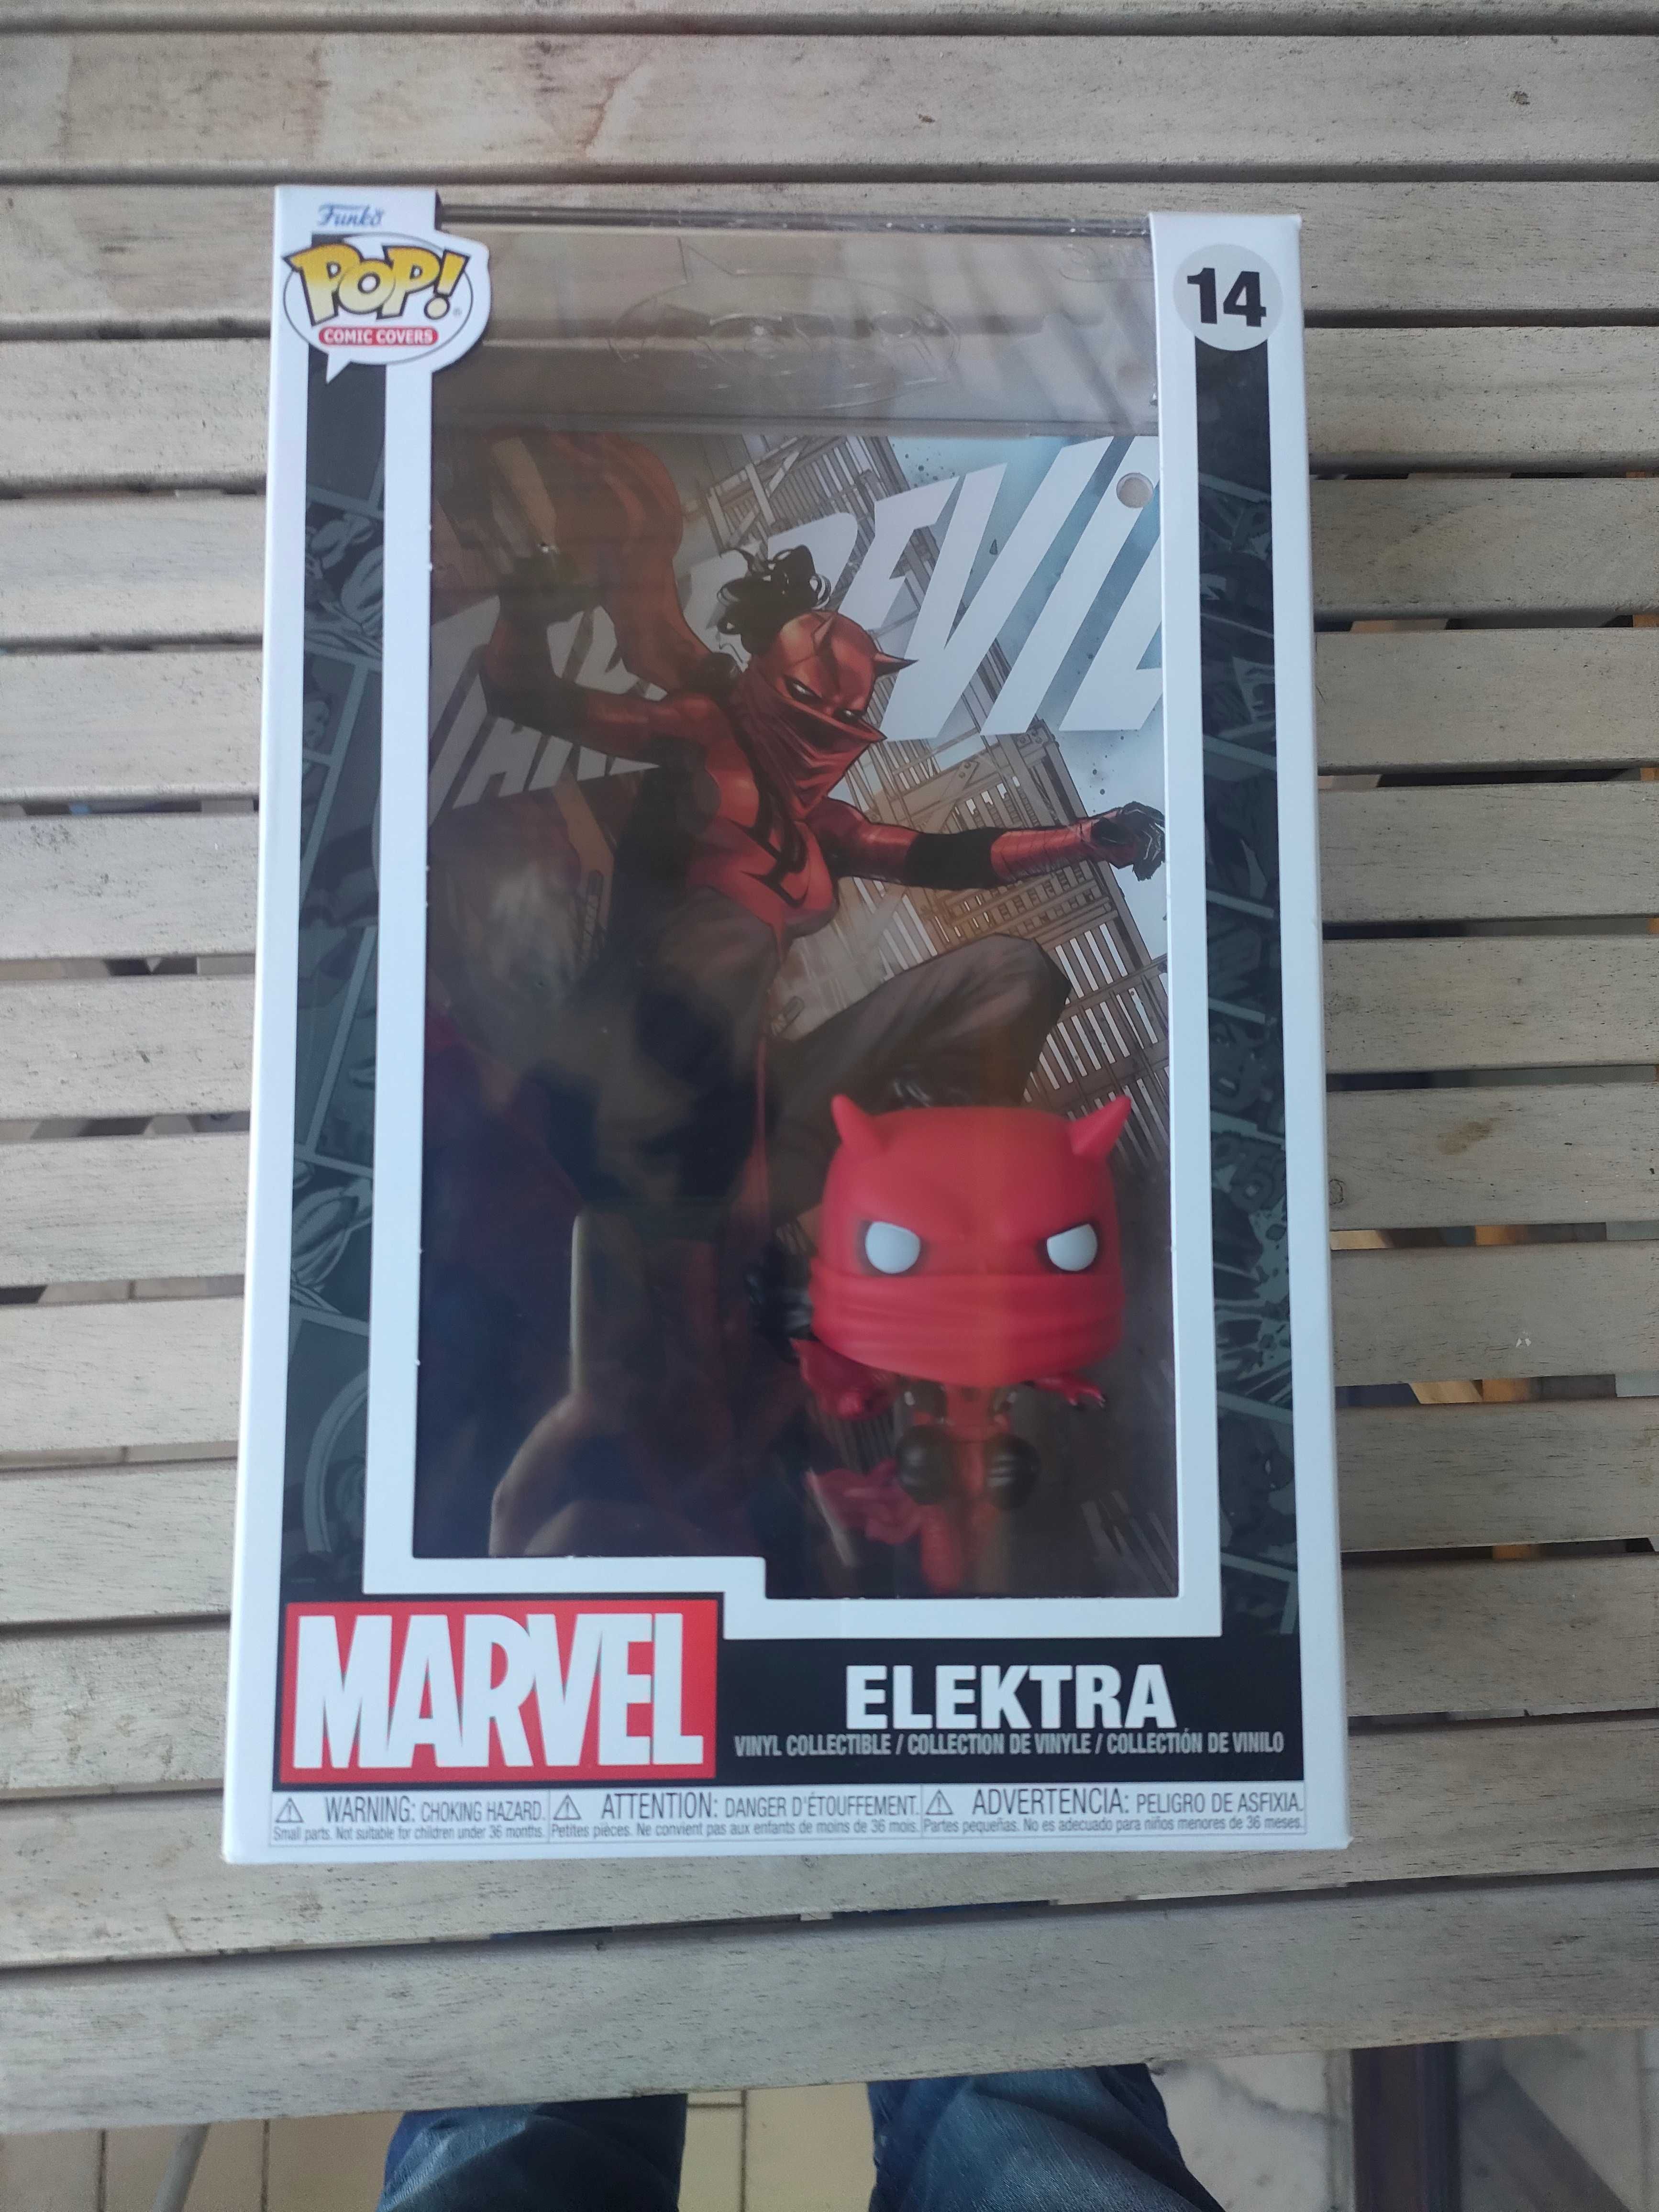 Funko Pop Marvel Comic Covers -
Elektra